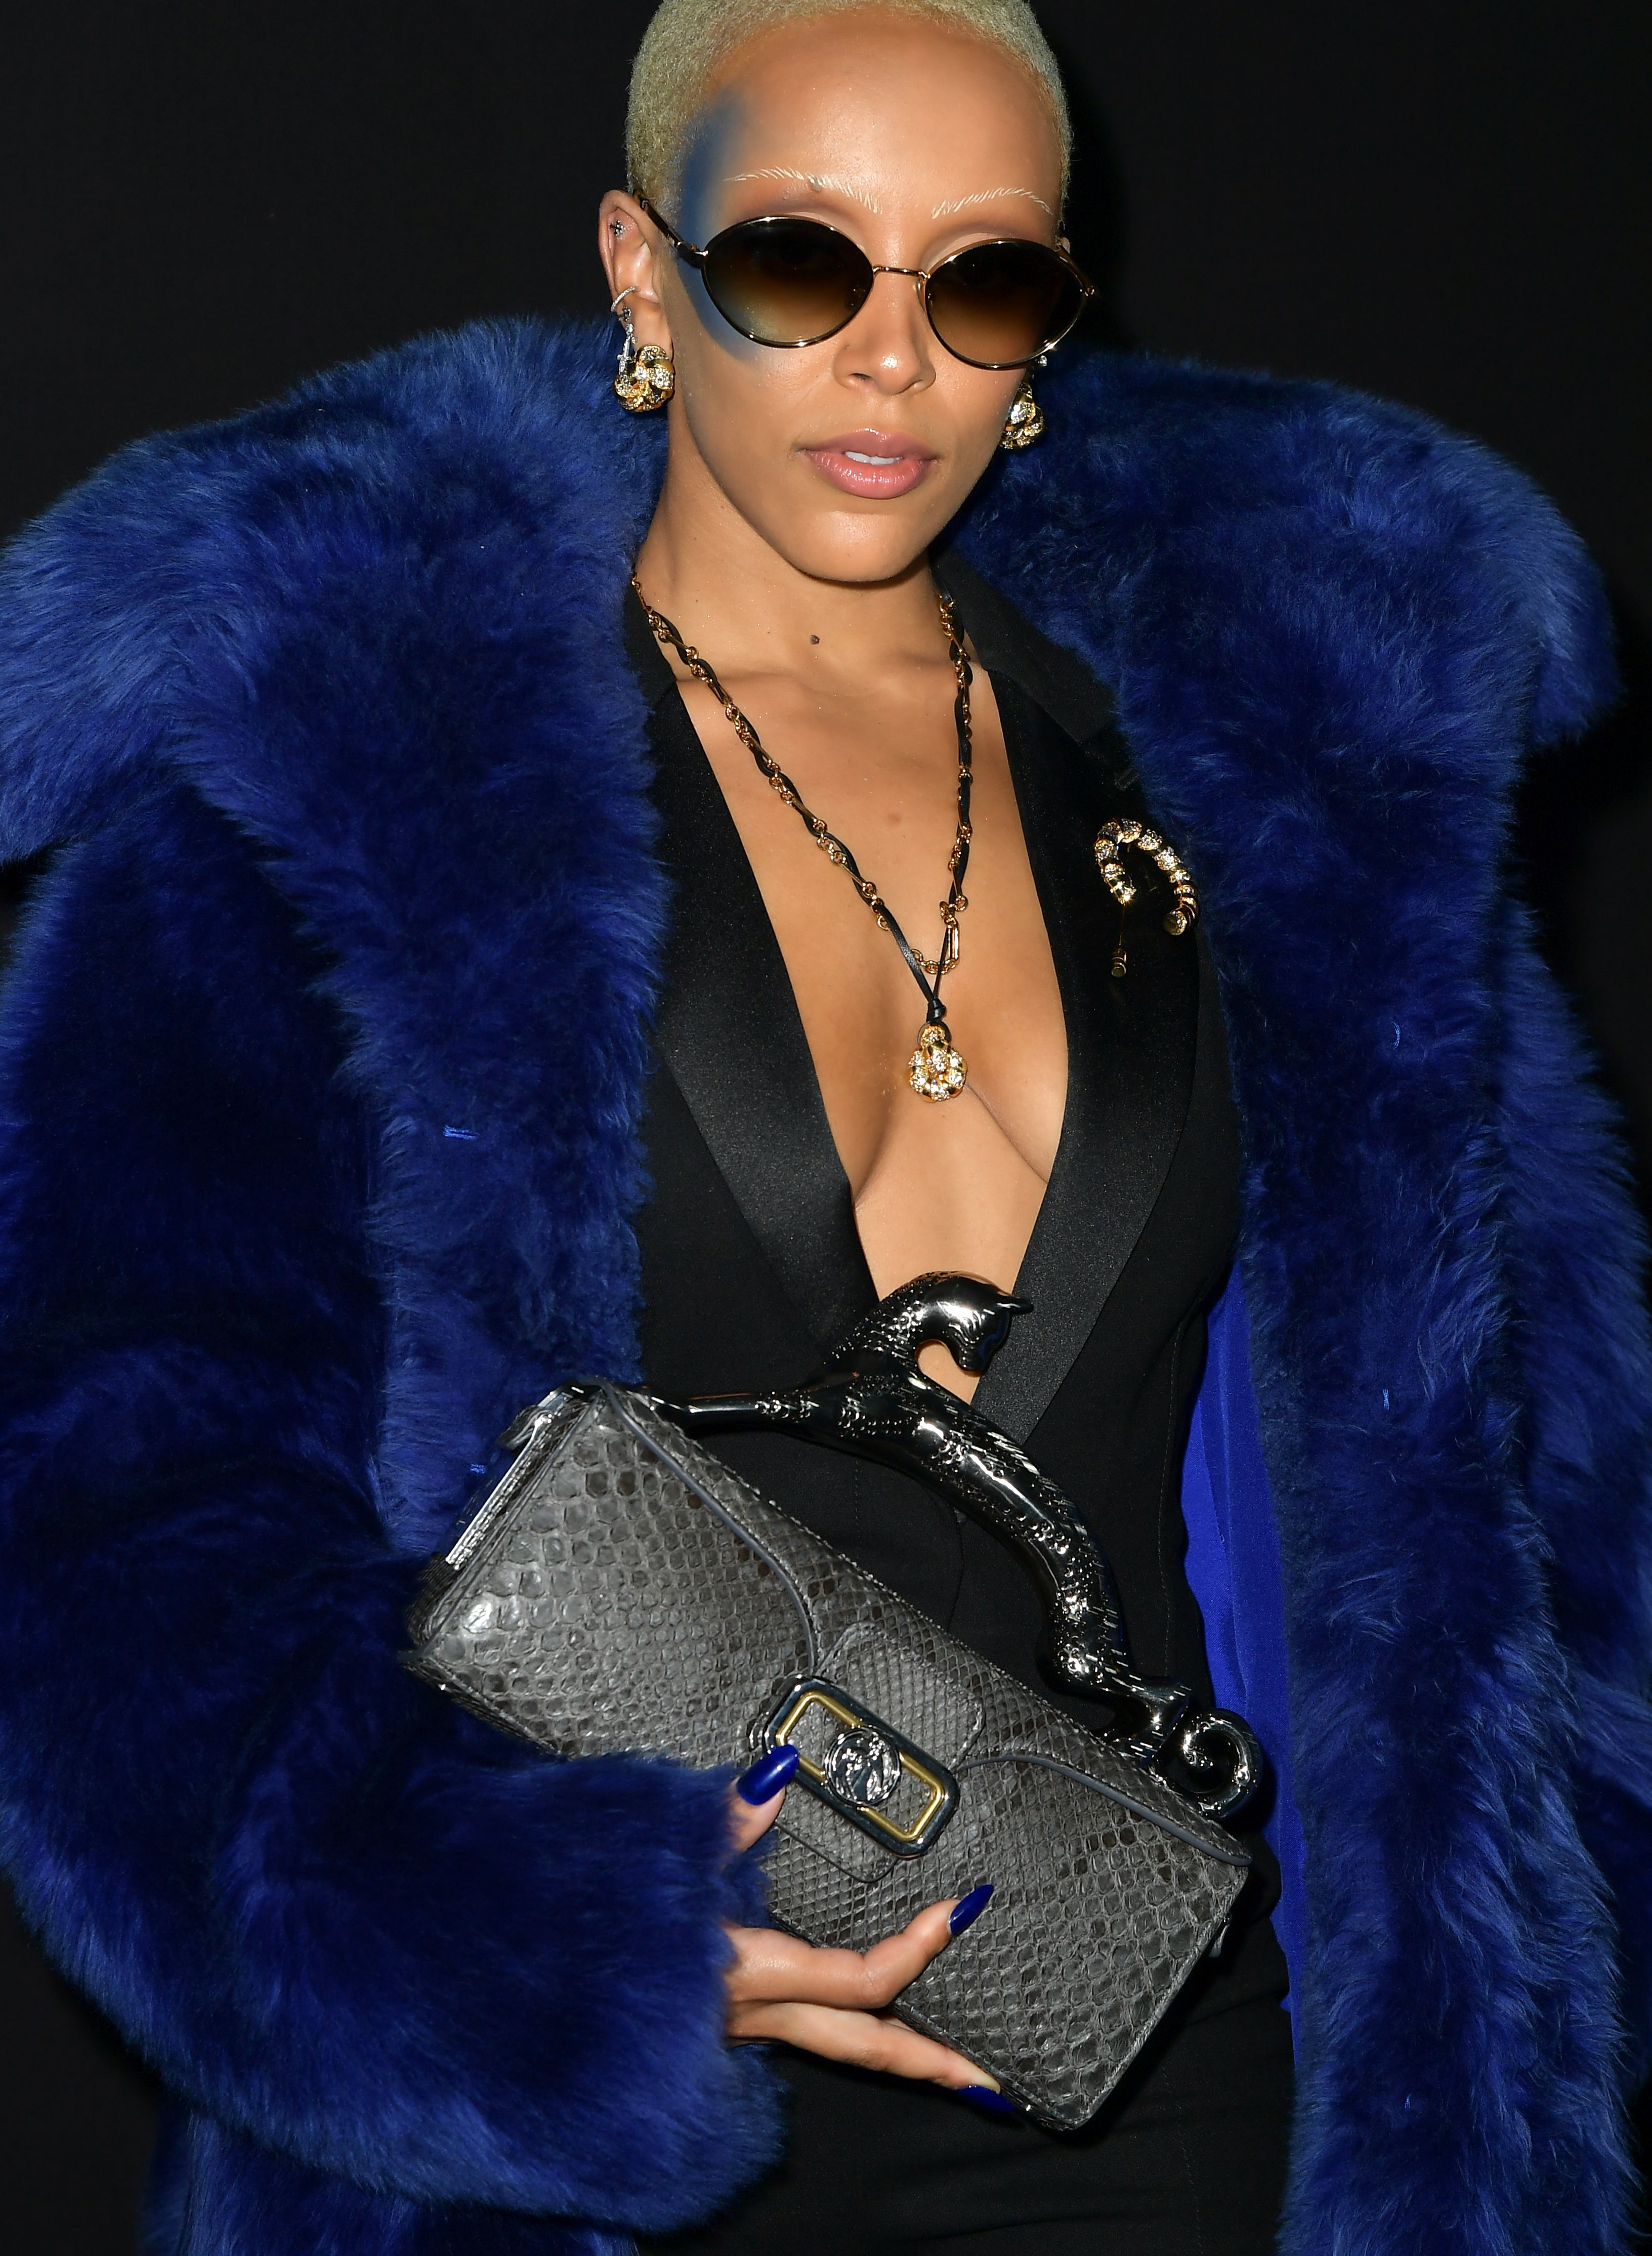 A close-up of Doja wearing sunglasses and a furry coat